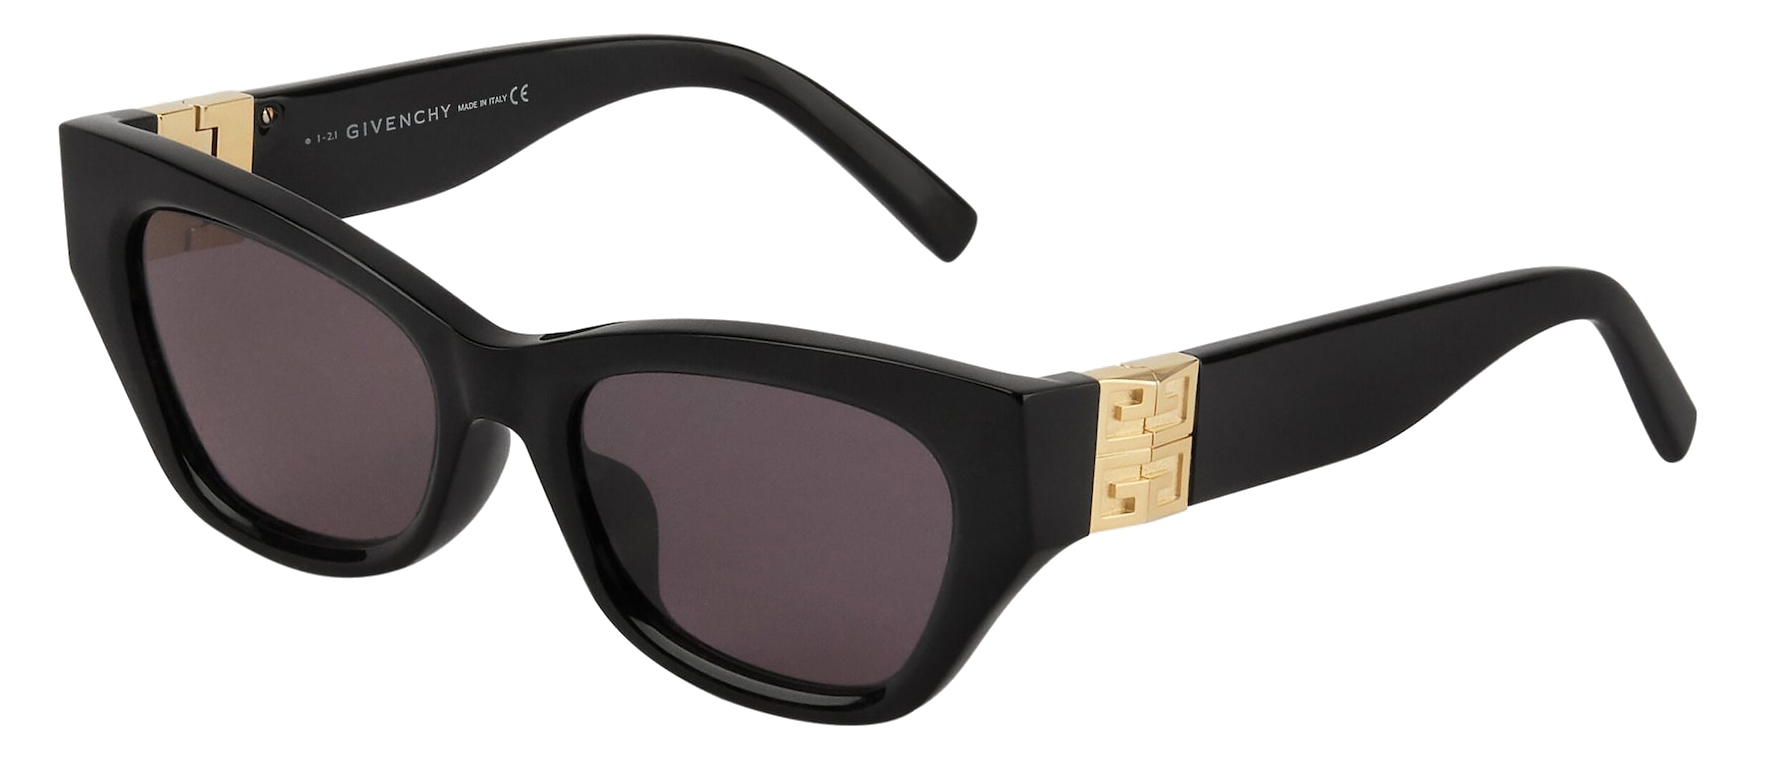 Givenchy - 4G Sunglasses in Acetate - Black - Sunglasses - Givenchy Eyewear  - Avvenice